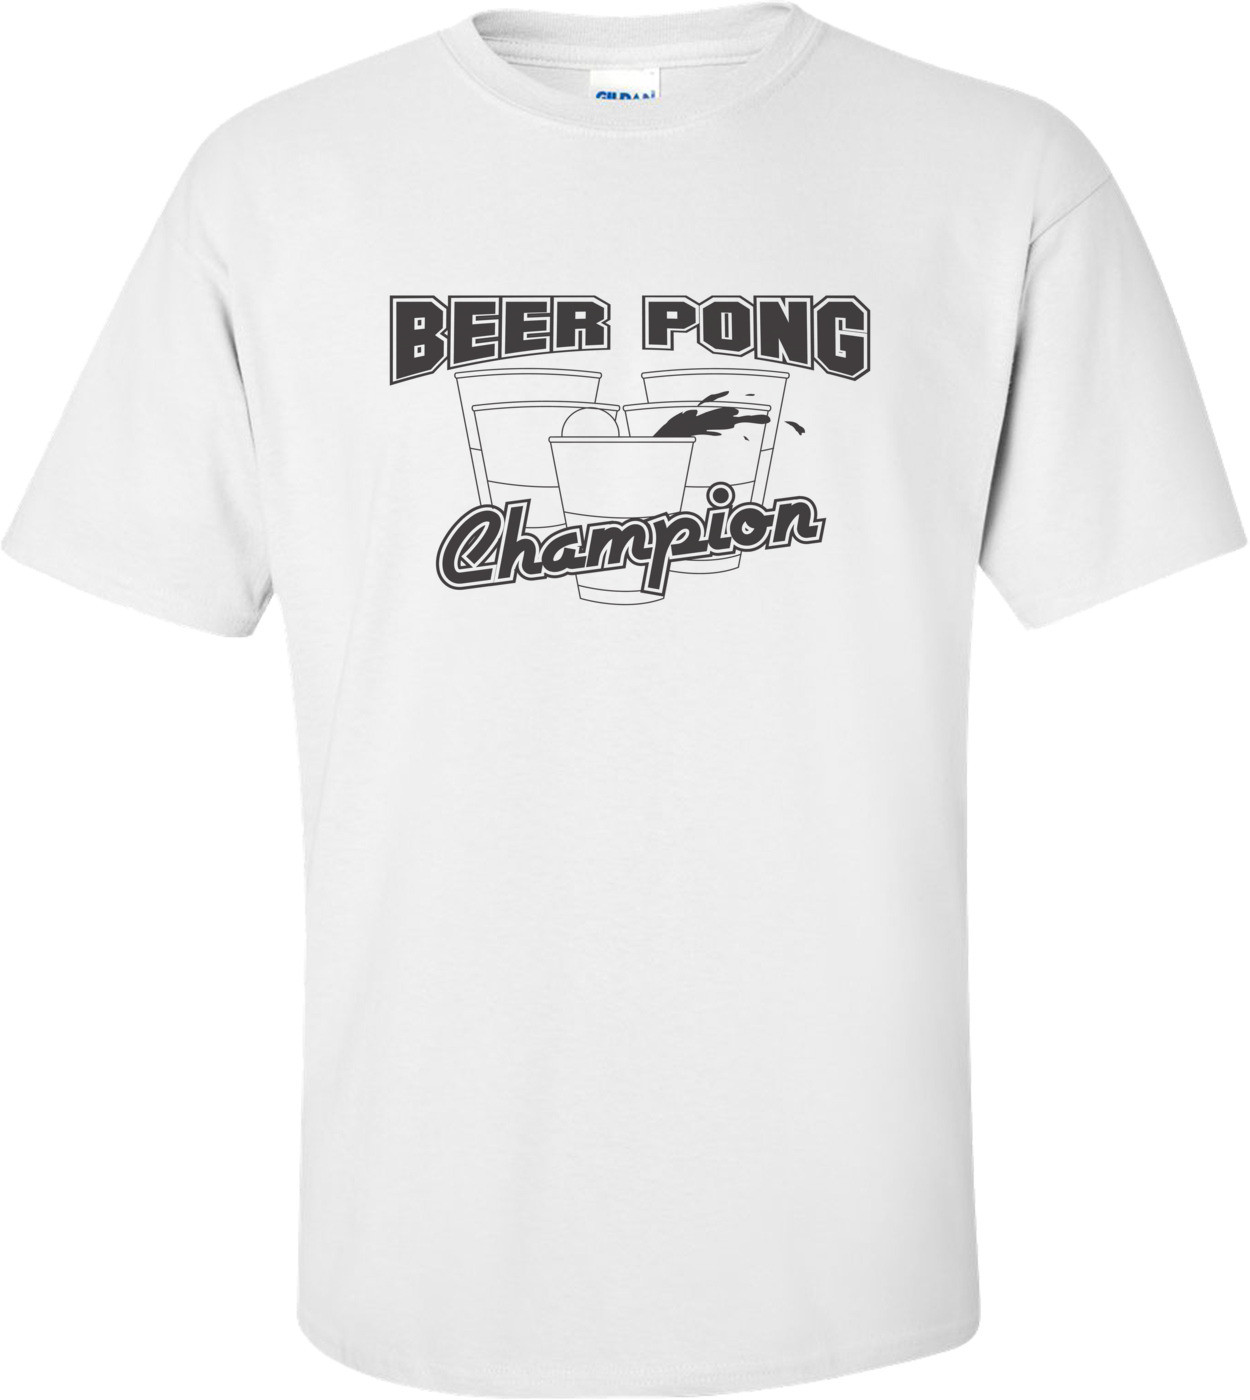 Beer Pong Champion T-shirt